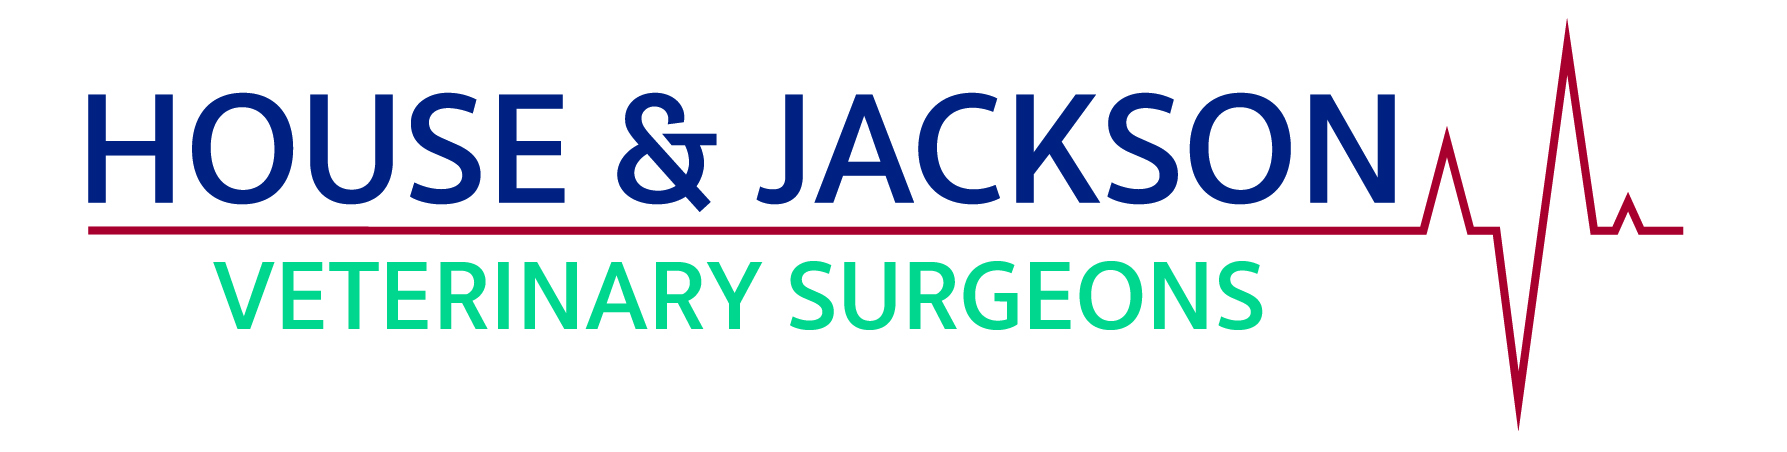 House & Jackson Veterinary Surgeons